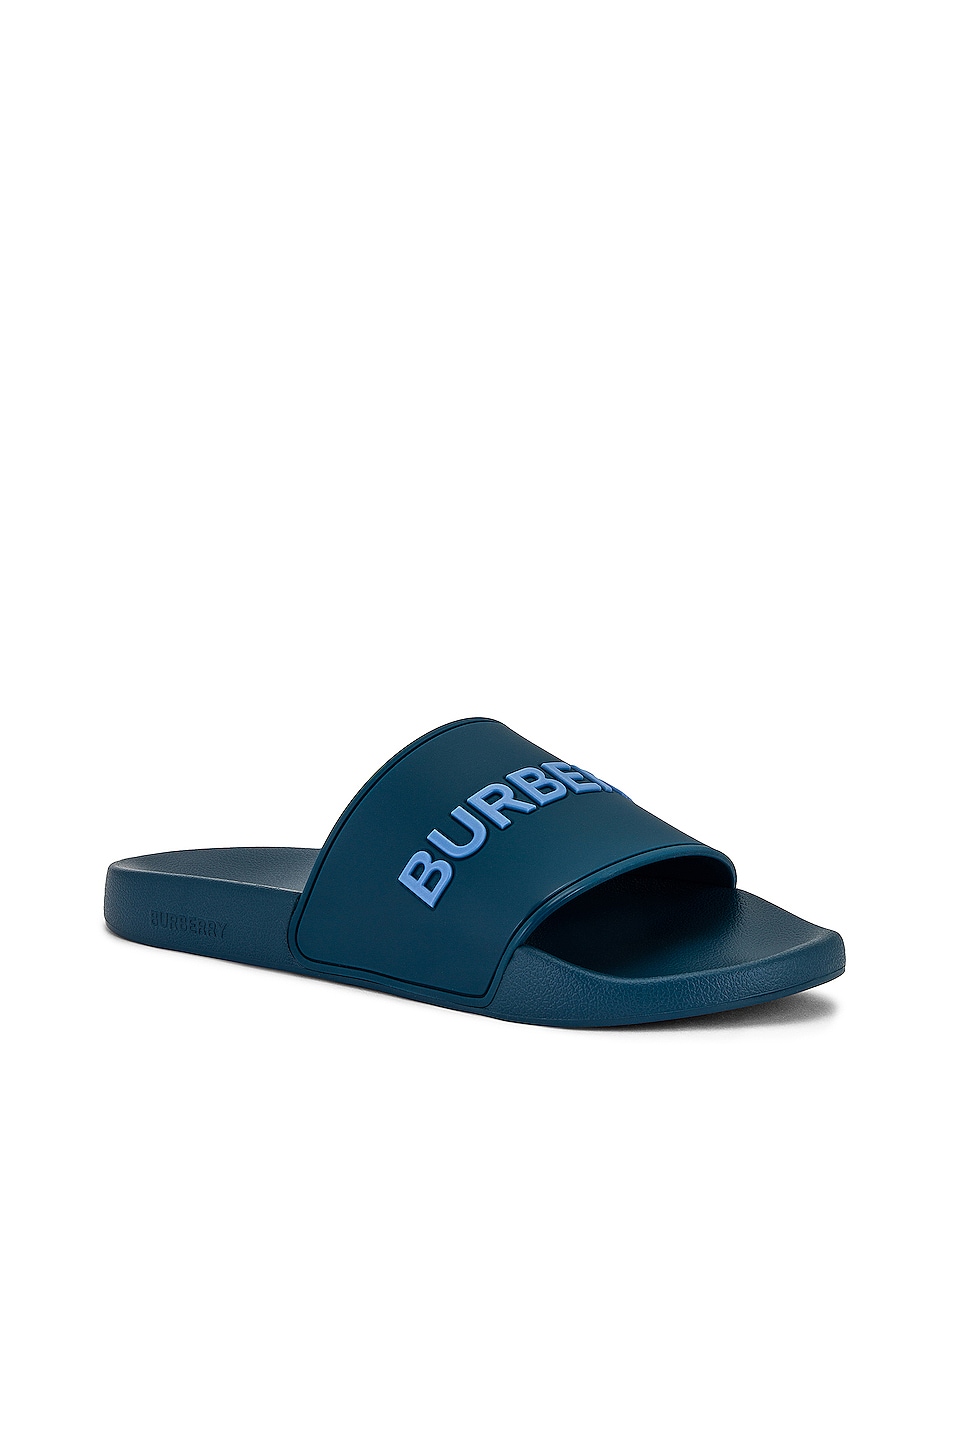 Burberry Furley Slide Sandal in Dark Cerulean Blue | FWRD